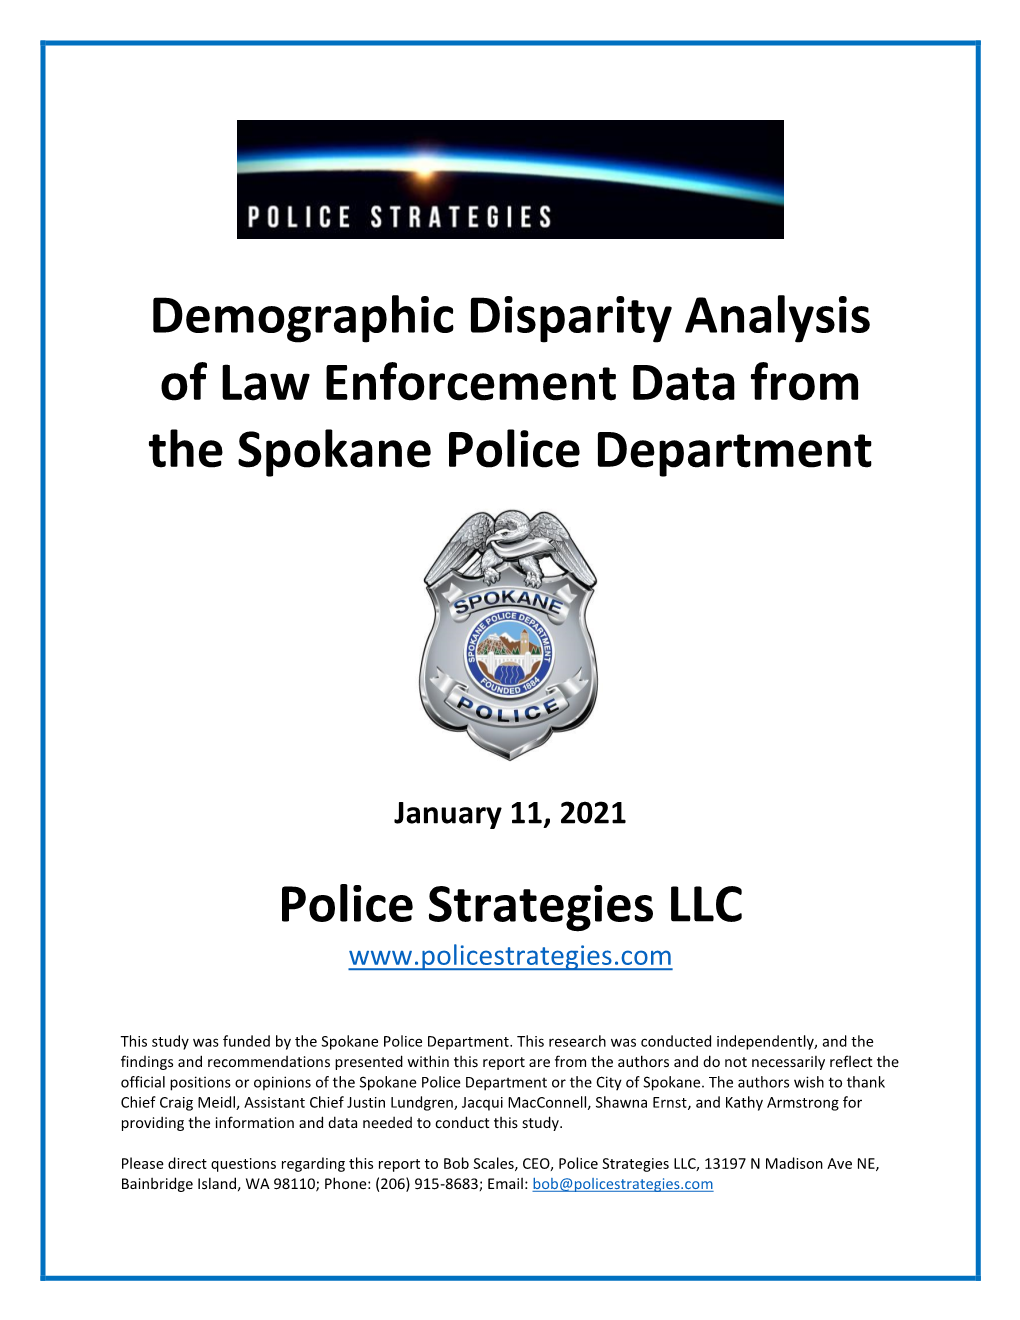 Police Strategies LLC